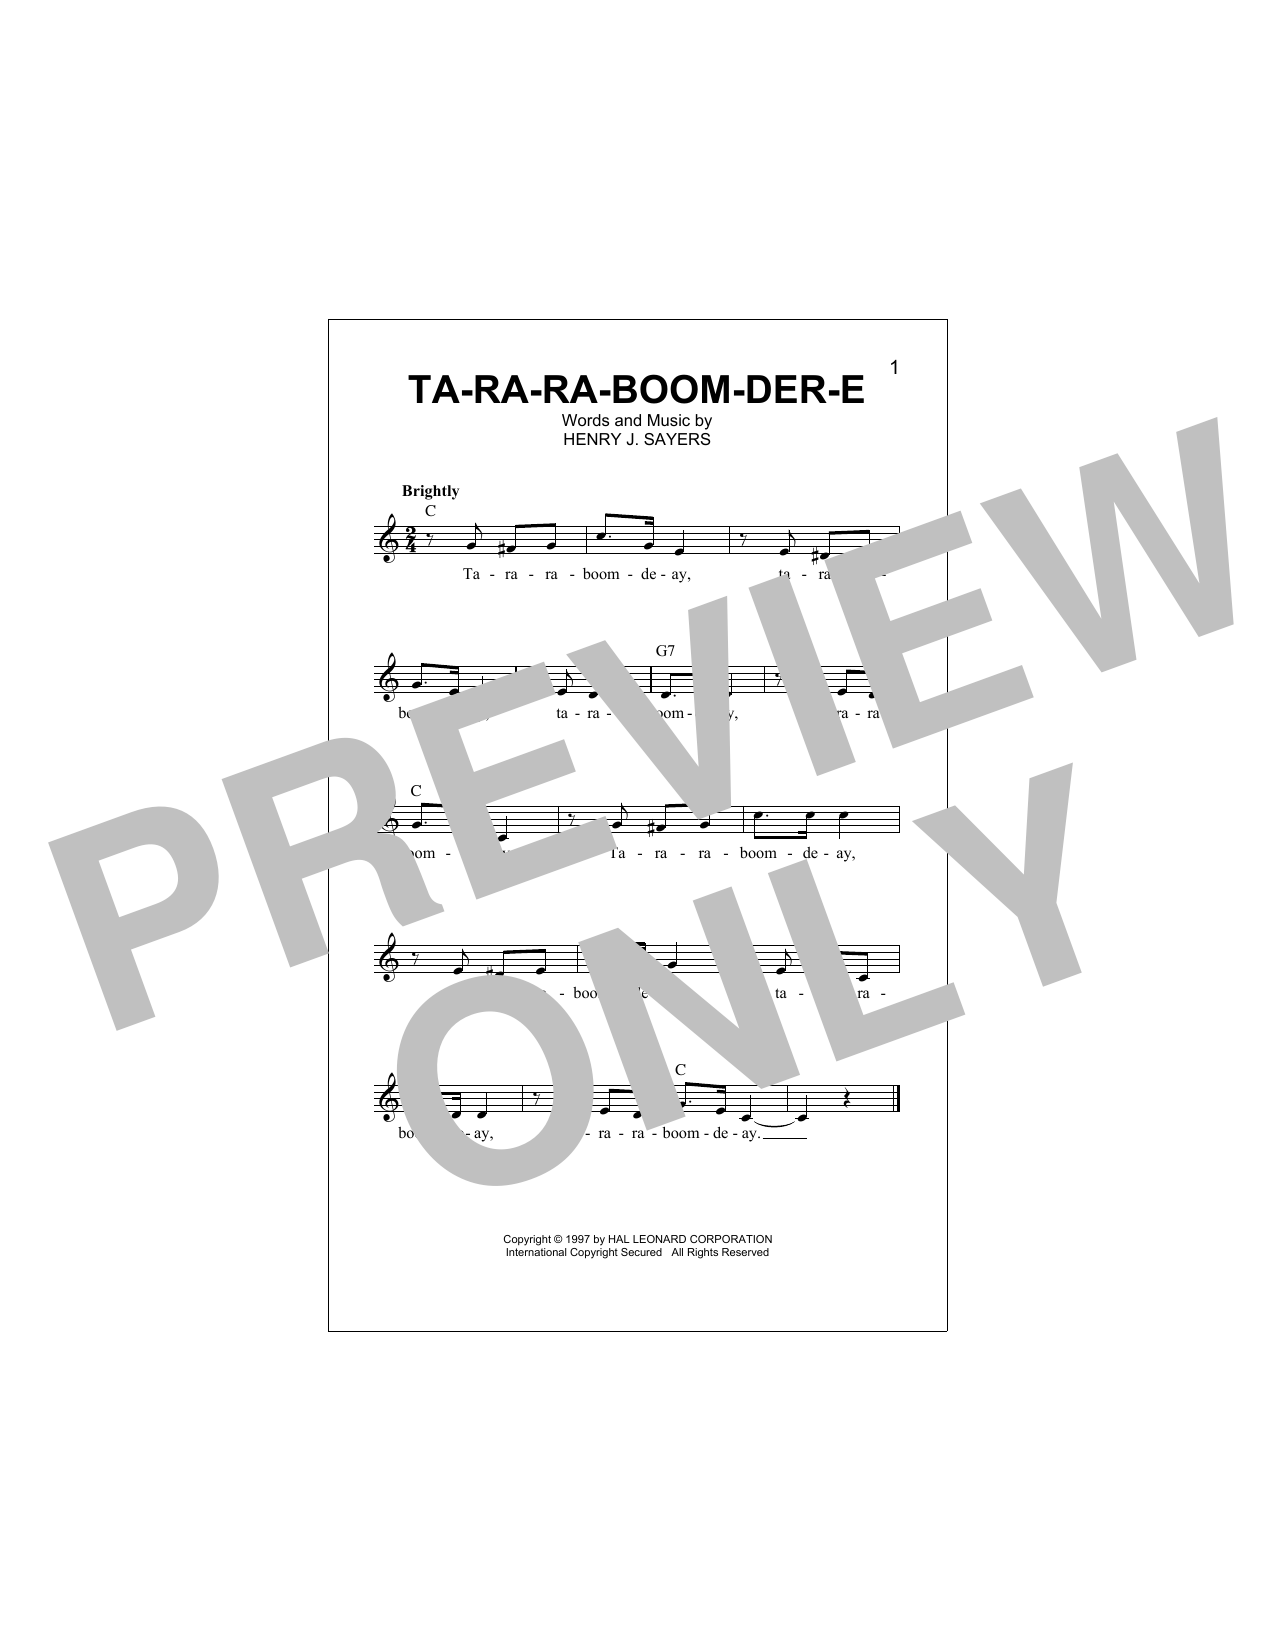 Henry J. Sayers Ta-Ra-Ra-Boom-Der-E Sheet Music Notes & Chords for Melody Line, Lyrics & Chords - Download or Print PDF